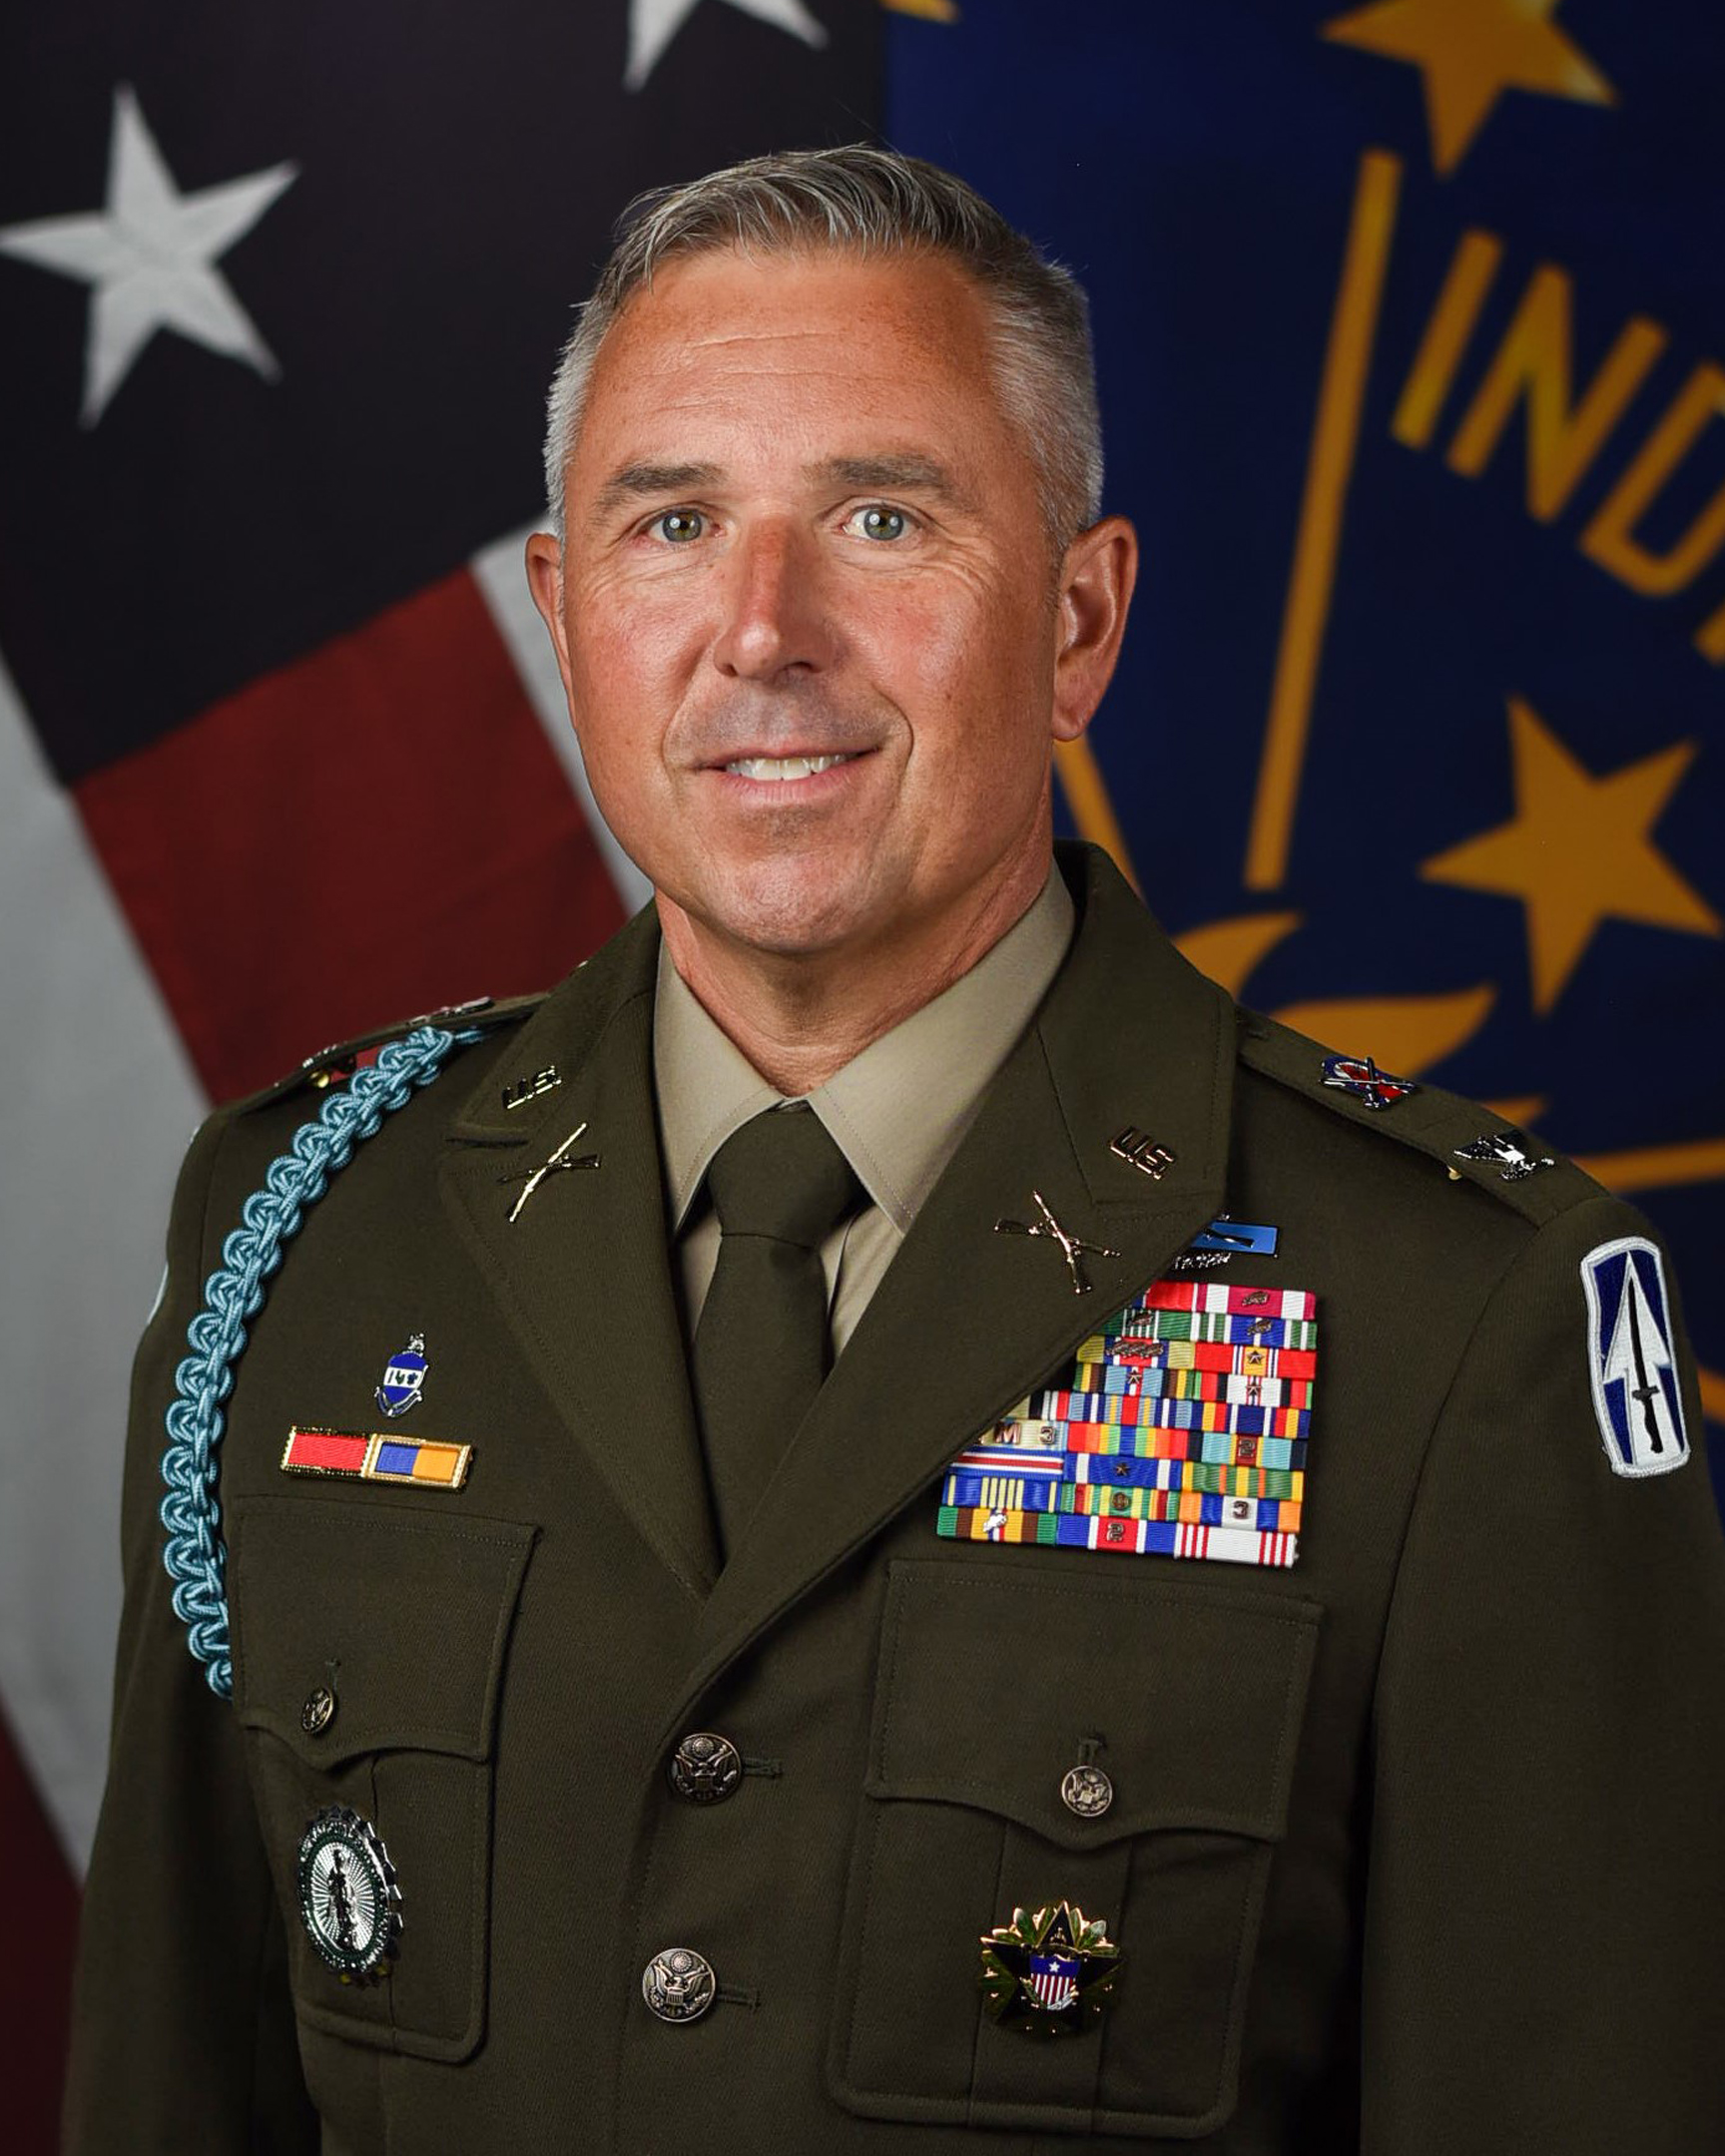 Col. Chris M. Mabis, Chief of Staff